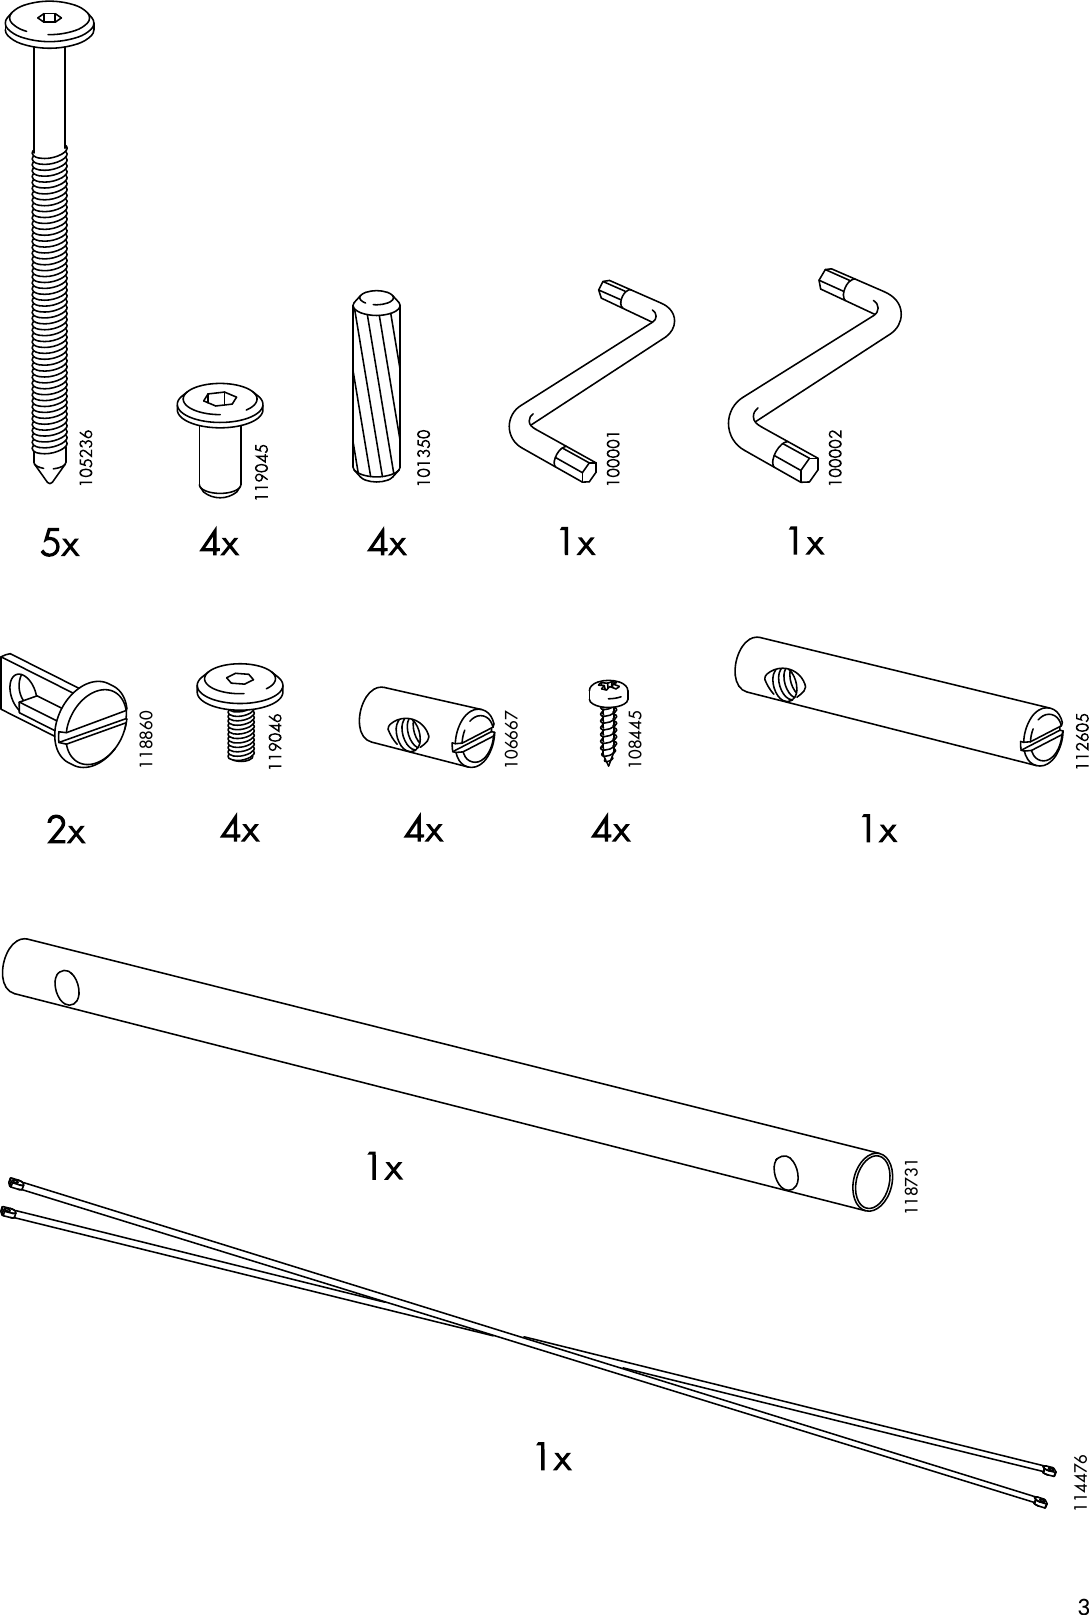 Page 3 of 8 - Ikea Ikea-Sniglar-Bed-Frame-W-Guide-Rail-Assembly-Instruction